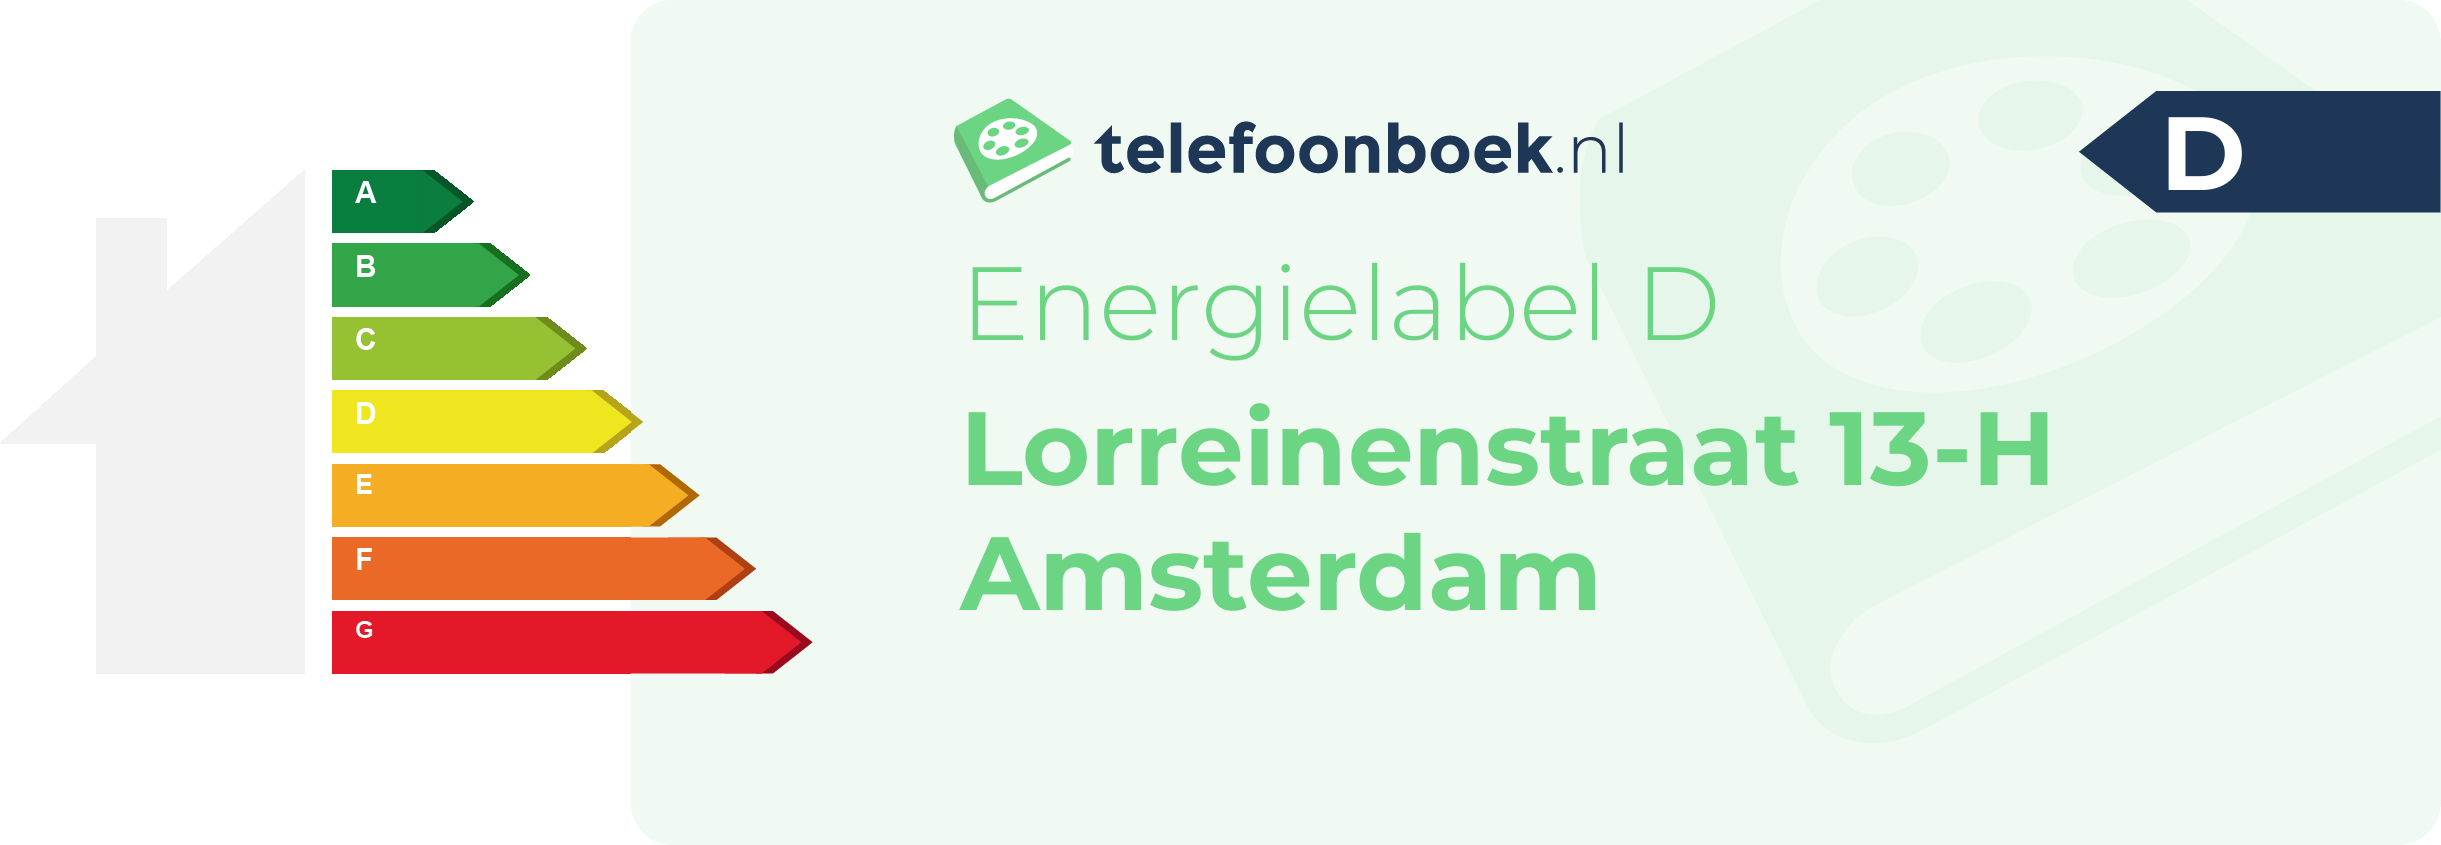 Energielabel Lorreinenstraat 13-H Amsterdam